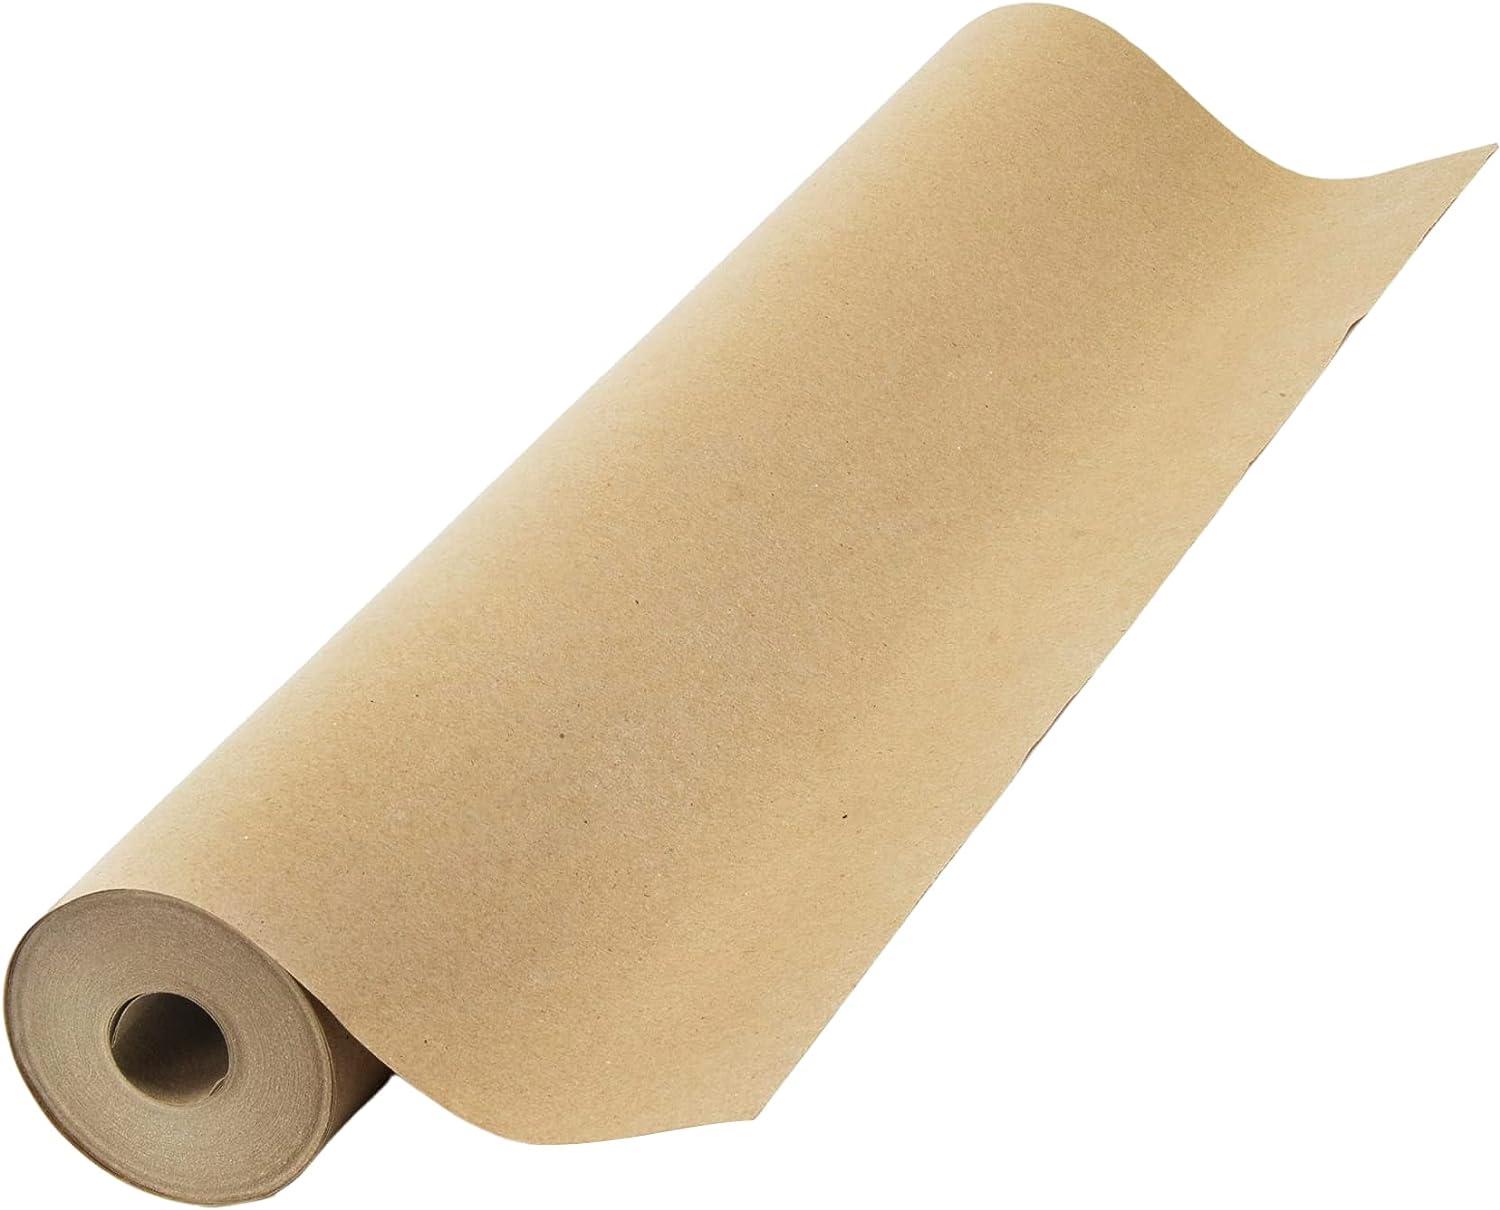 Kraft Paper Roll 17.5 x 100 Feet (1200 In), Plain Brown Shipping